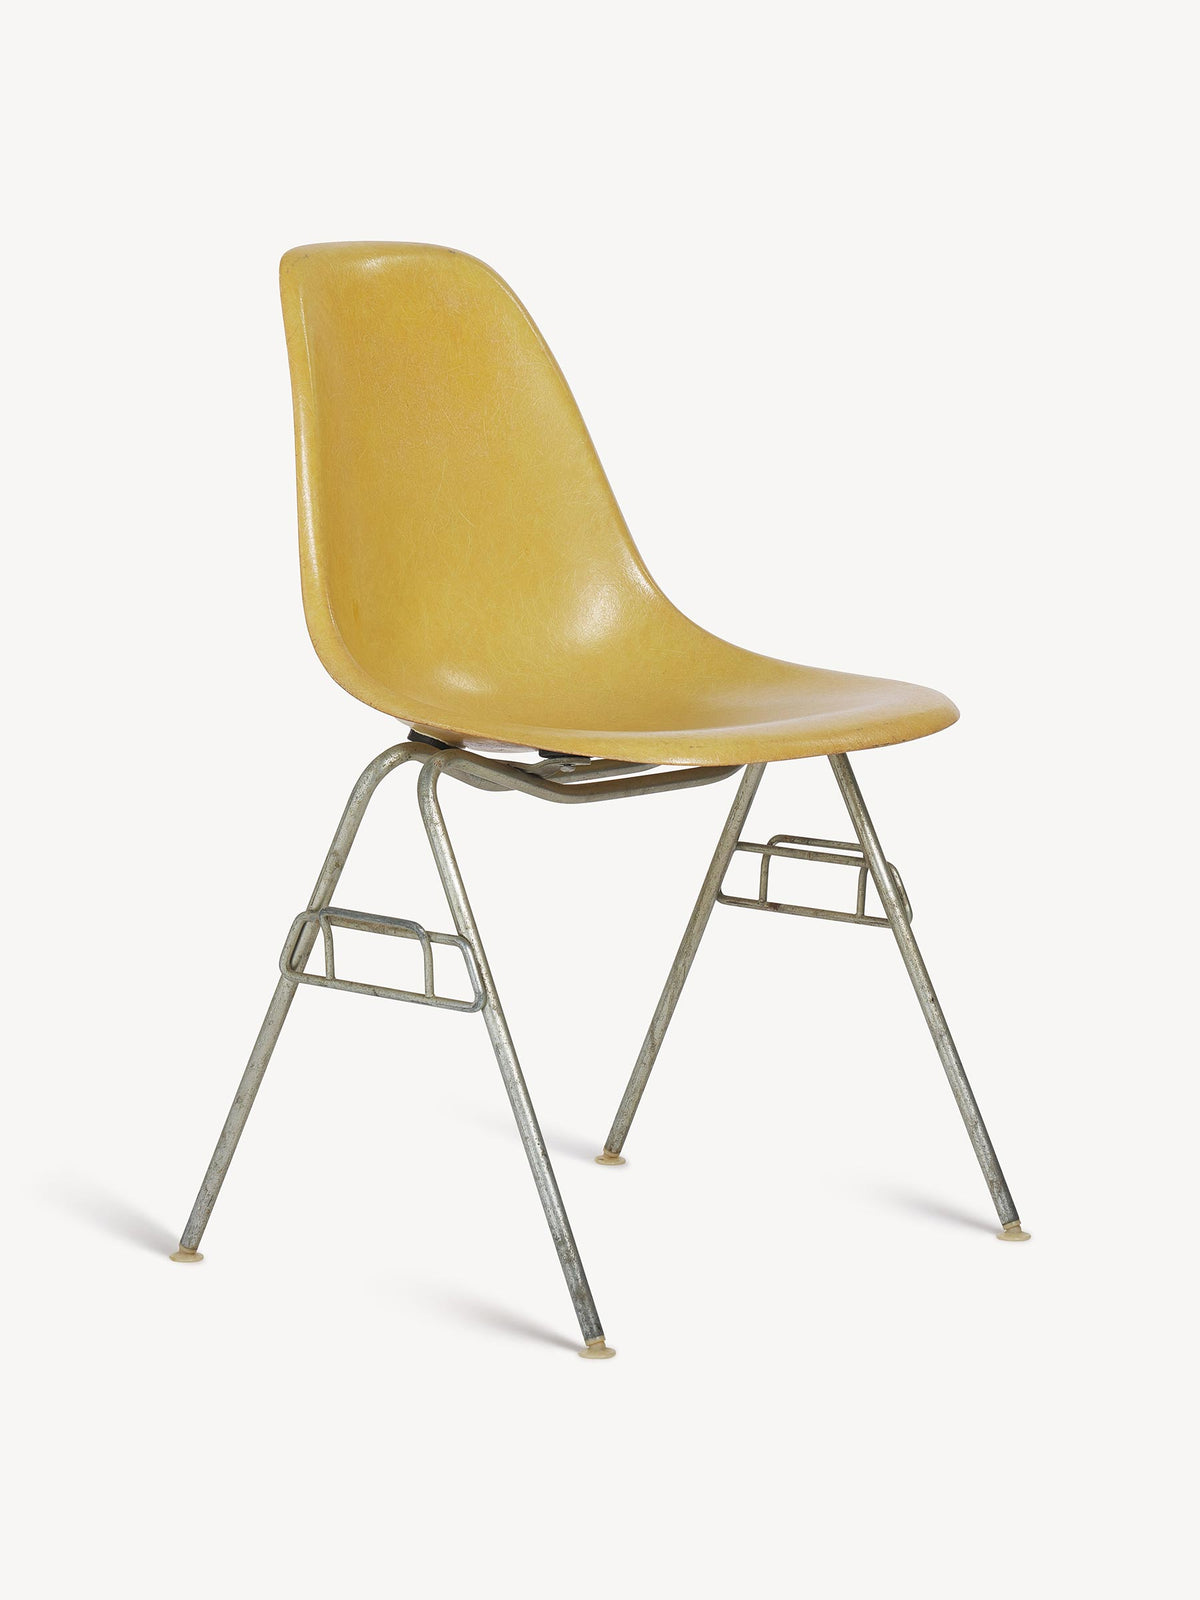 Eames Fiberglass Chairs, Set of 4 - 0263 - Product Flat